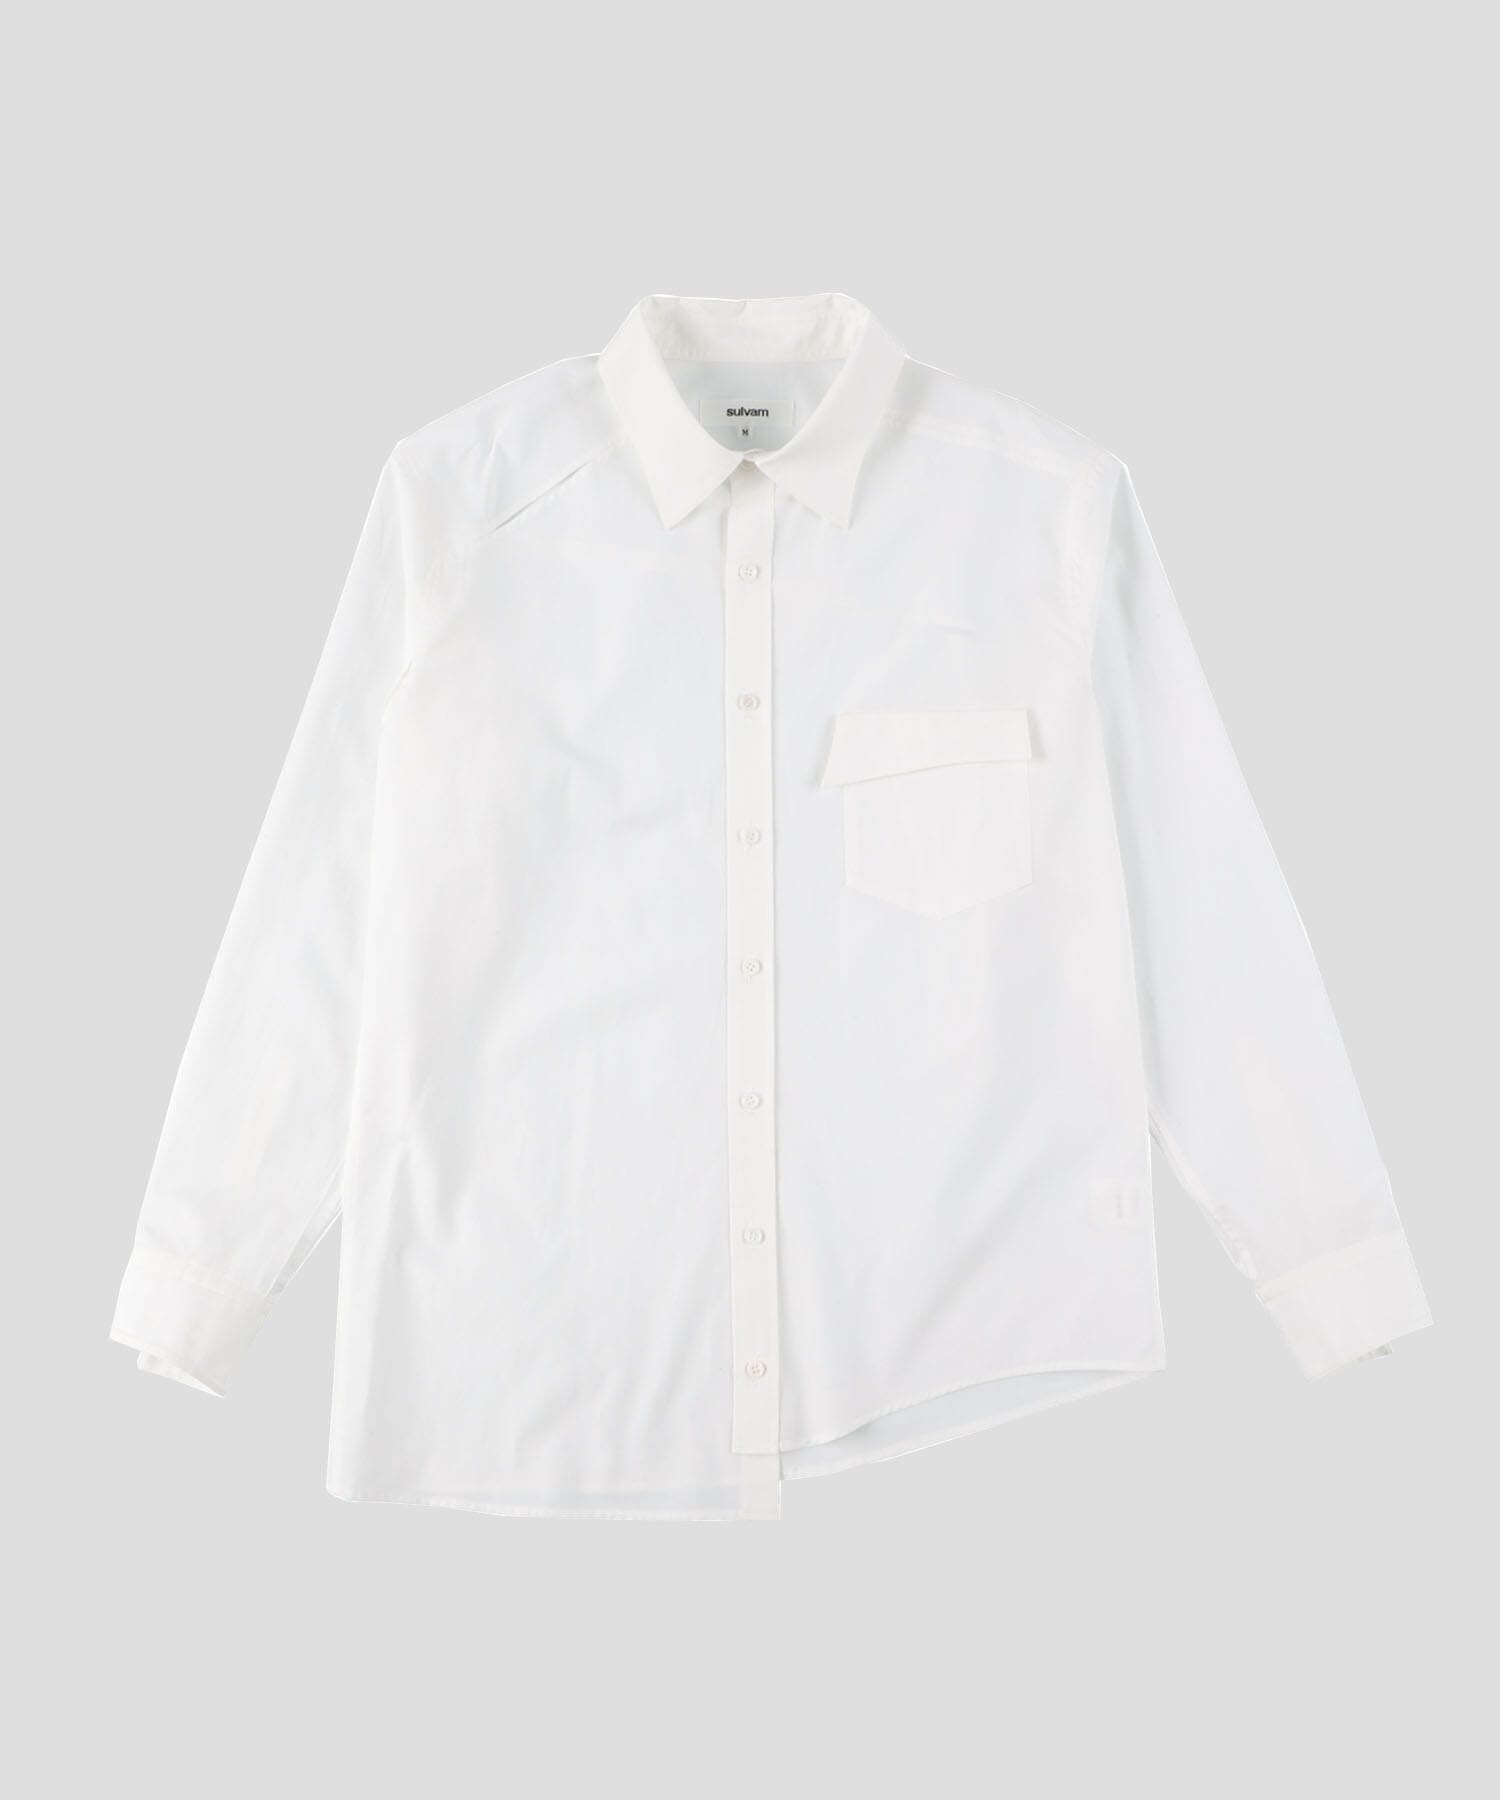 Slash stand collar shirts(S WHITE): sulvam: MEN｜THE TOKYO ONLINE 